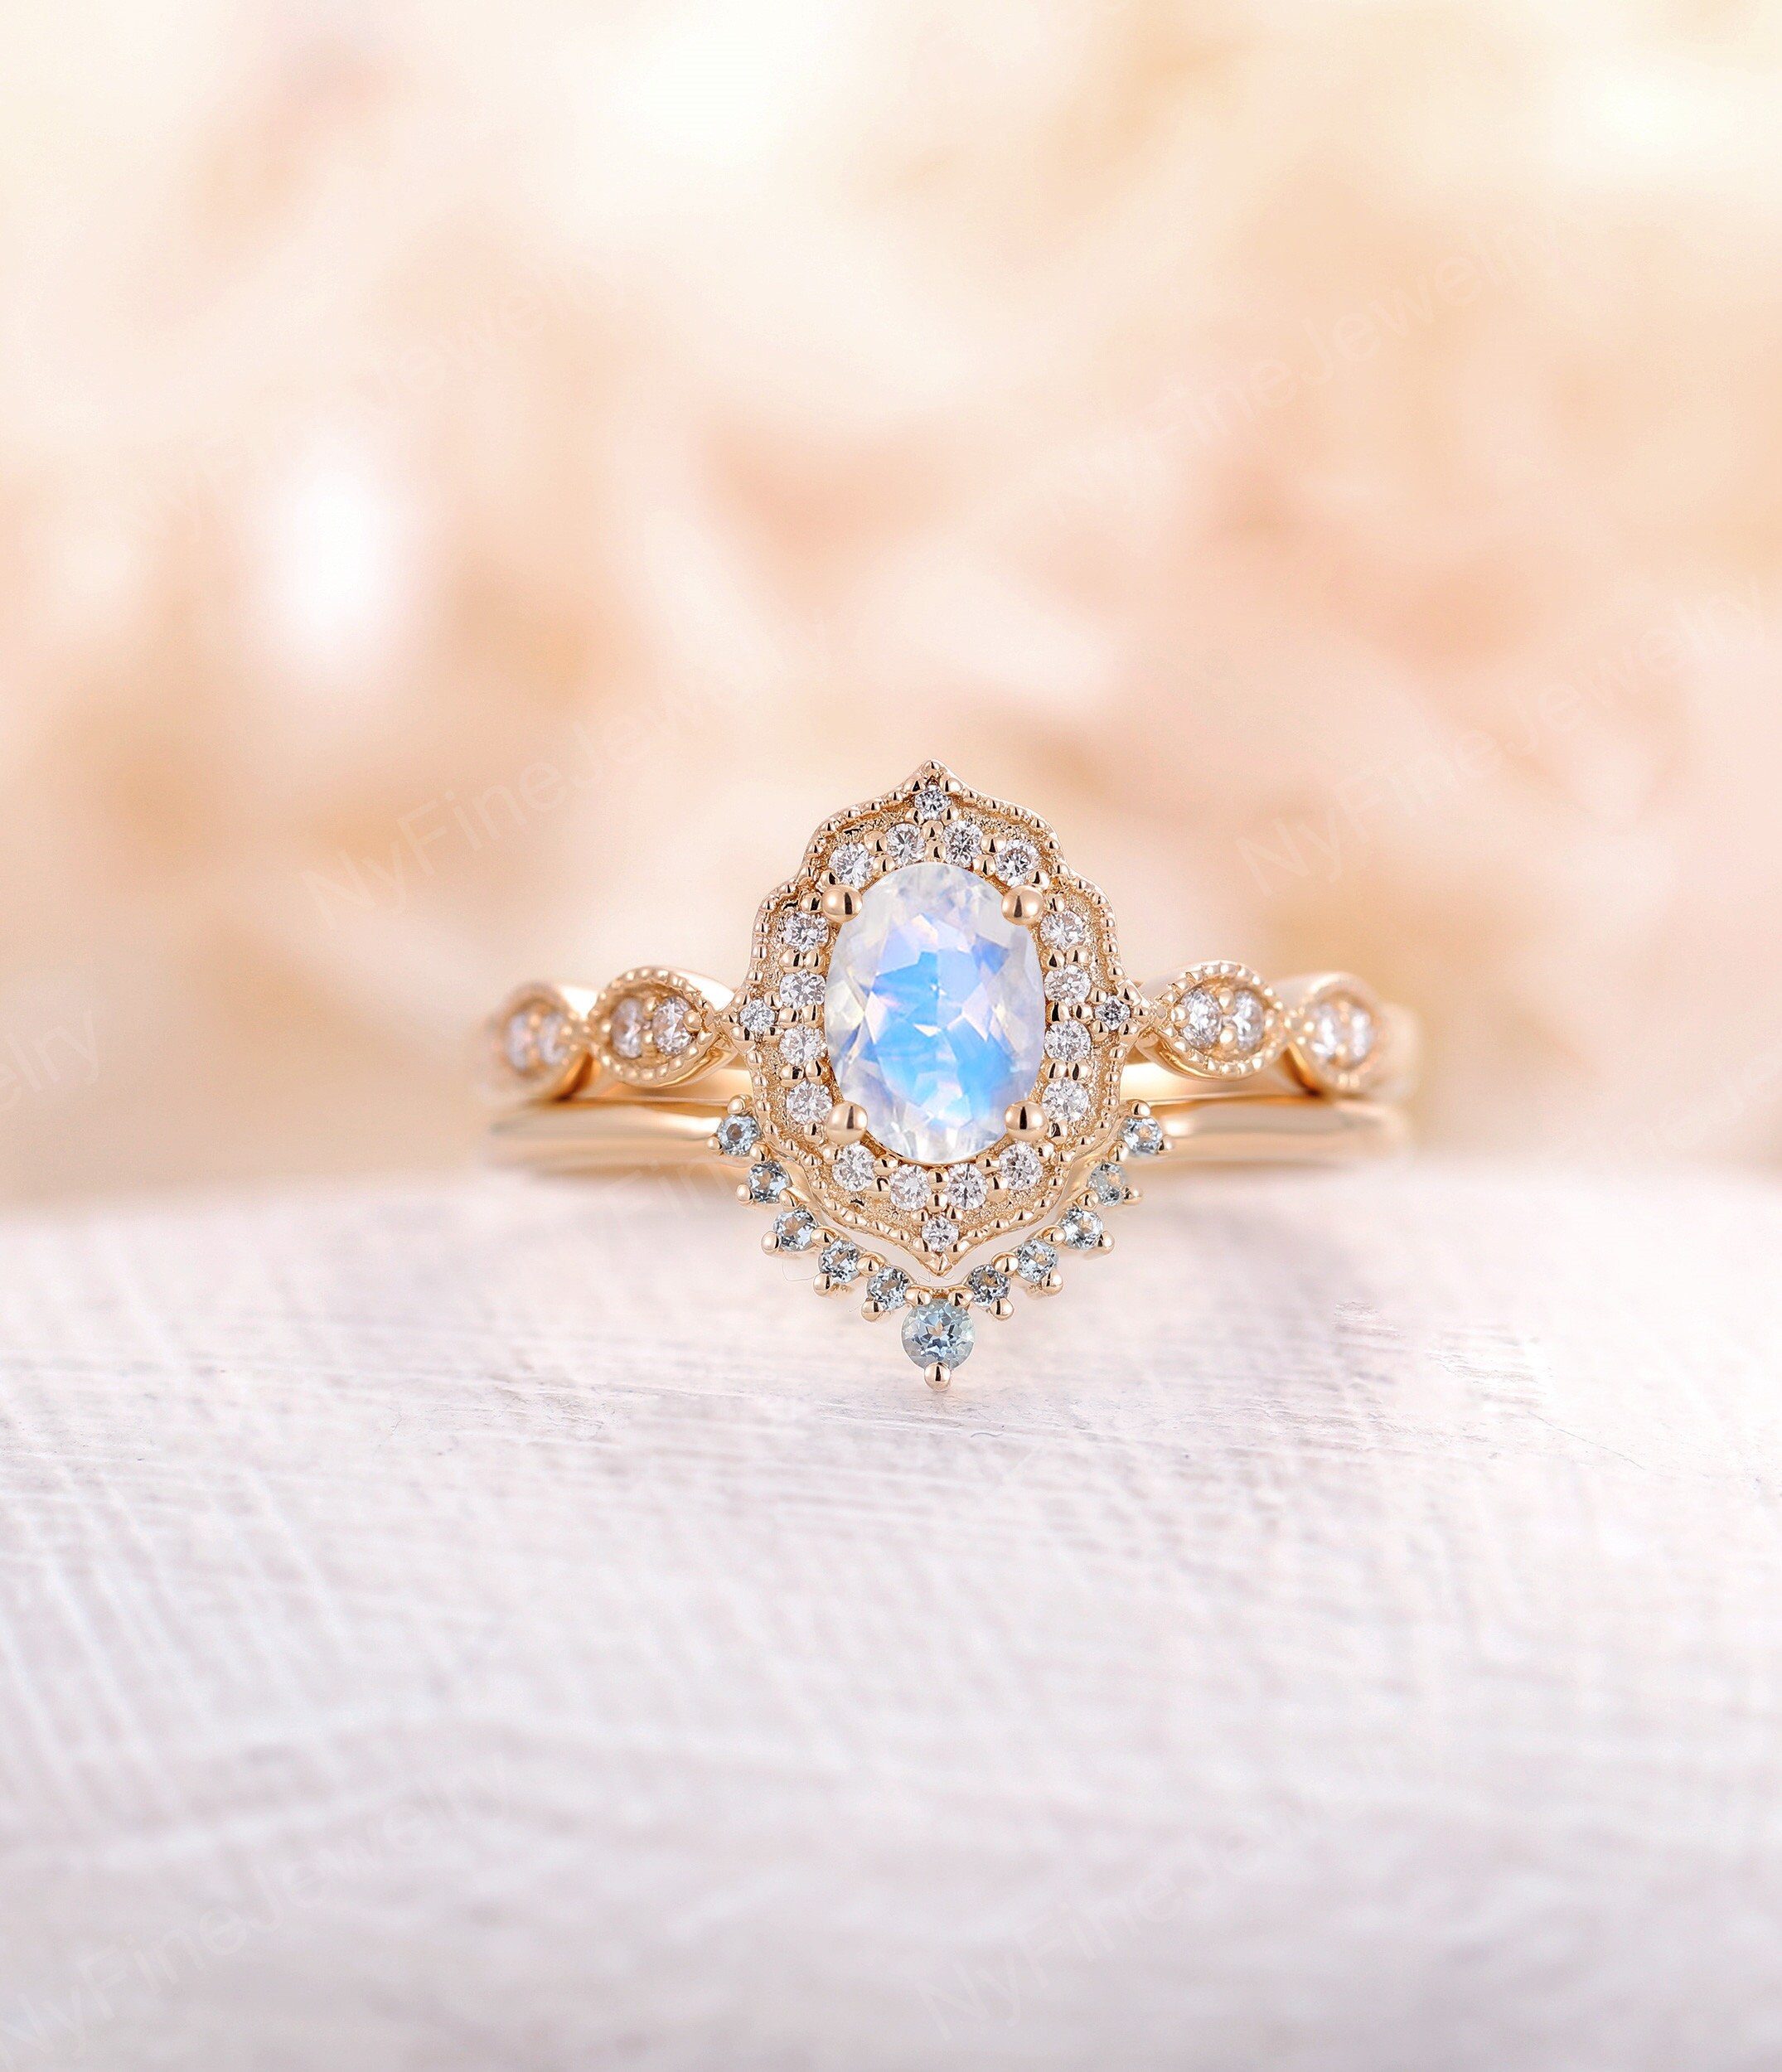 Moonstone engagement ring oval cut vintage diamond rings | Etsy